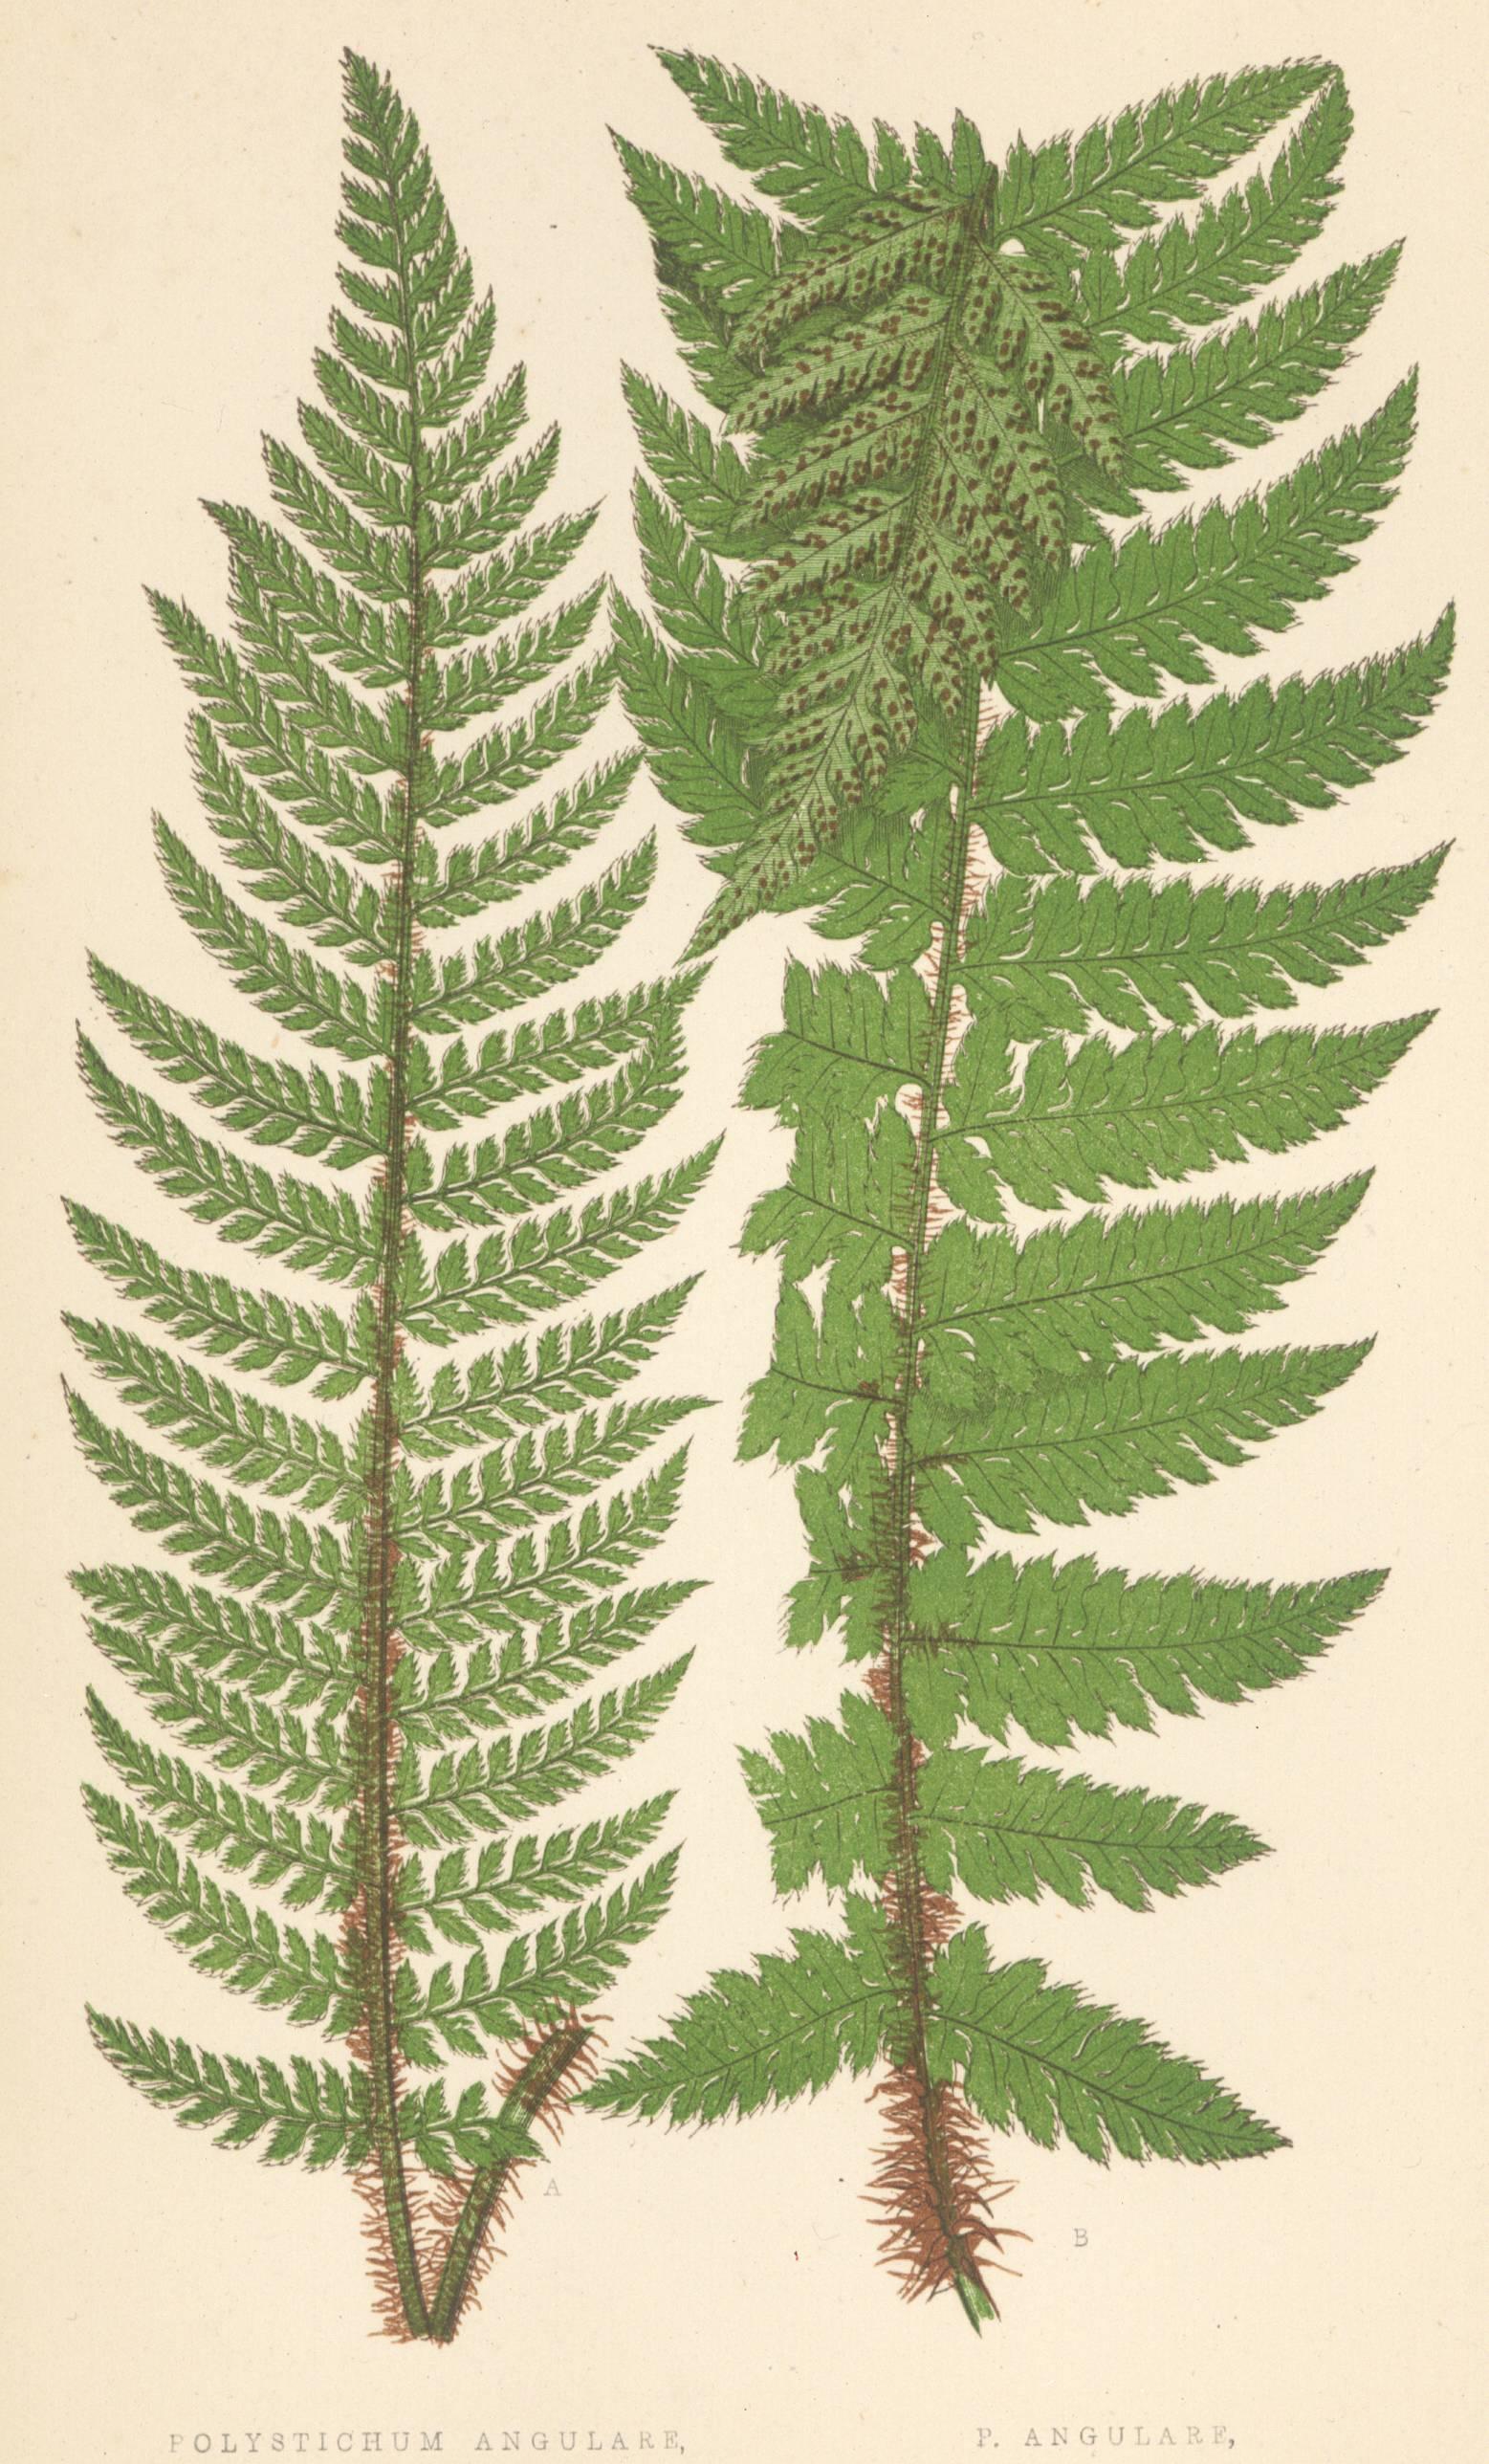 Polystichum Angulare and Lastrea Spinulosa - Naturalistic Print by Unknown